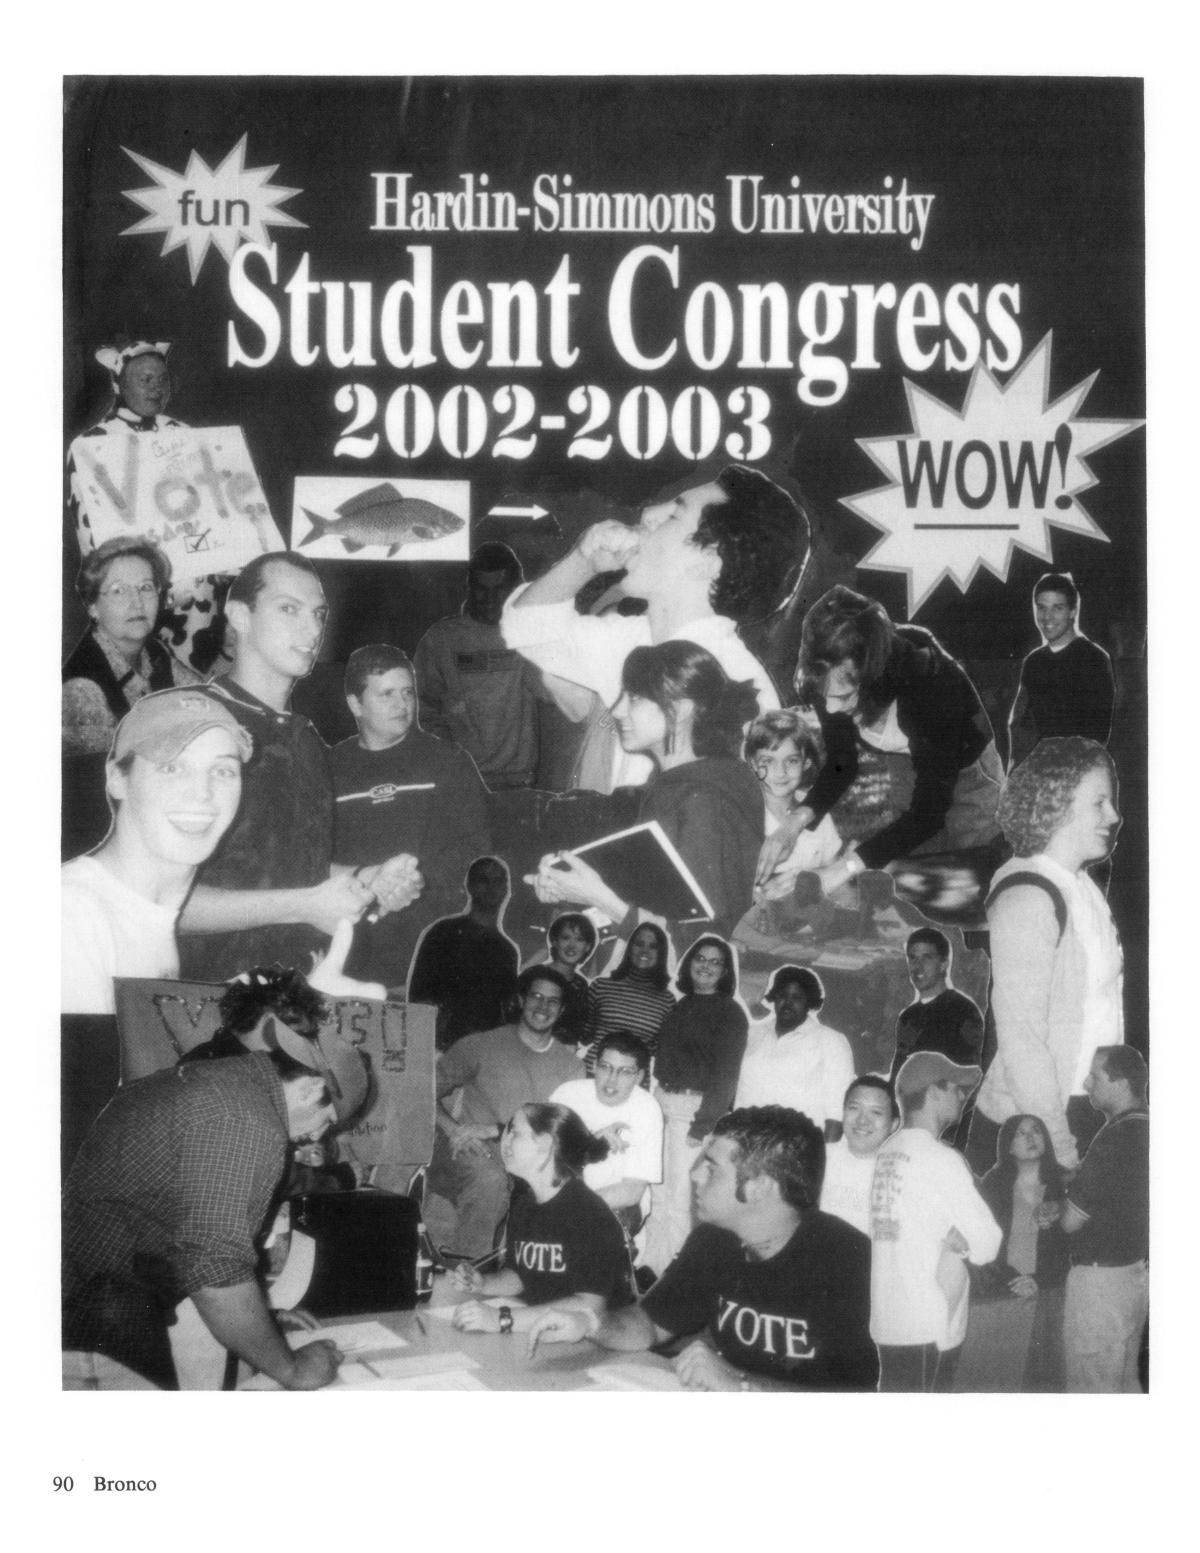 The Bronco, Yearbook of Hardin-Simmons University, 2003
                                                
                                                    90
                                                